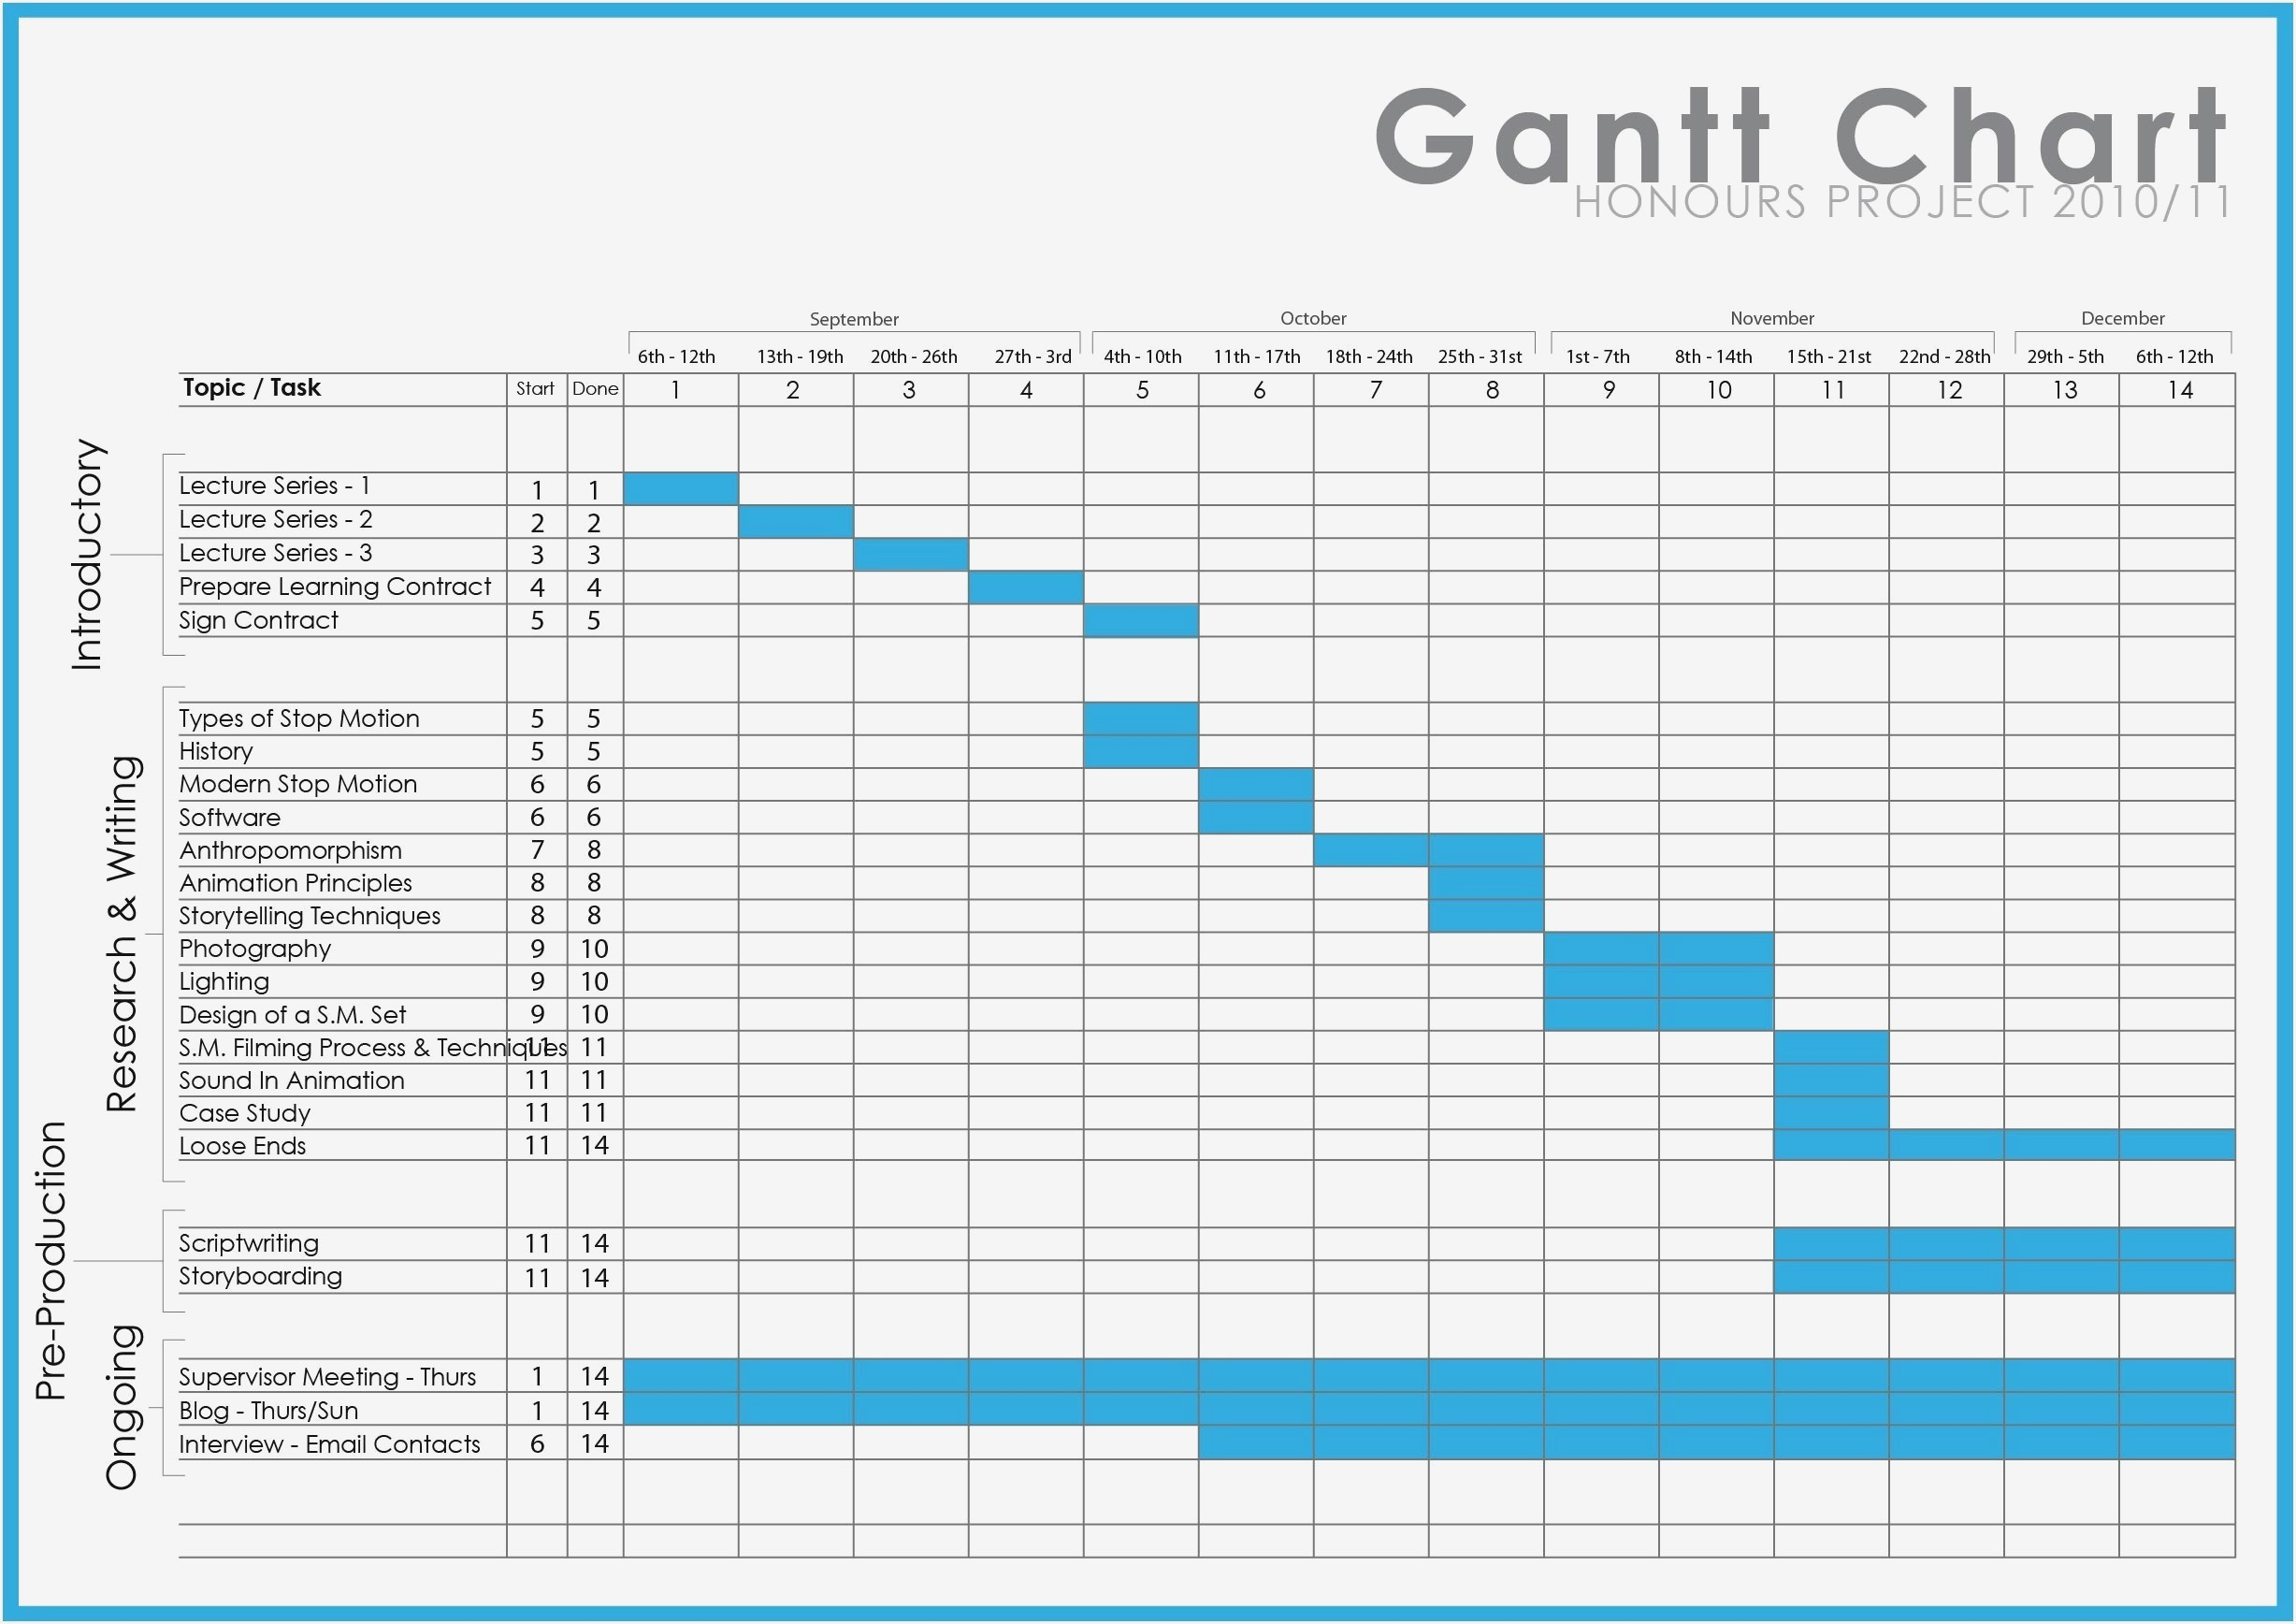 Gantt Chart Word Template Business Templates Microsoft Office For Throughout Gantt Chart Template For Word